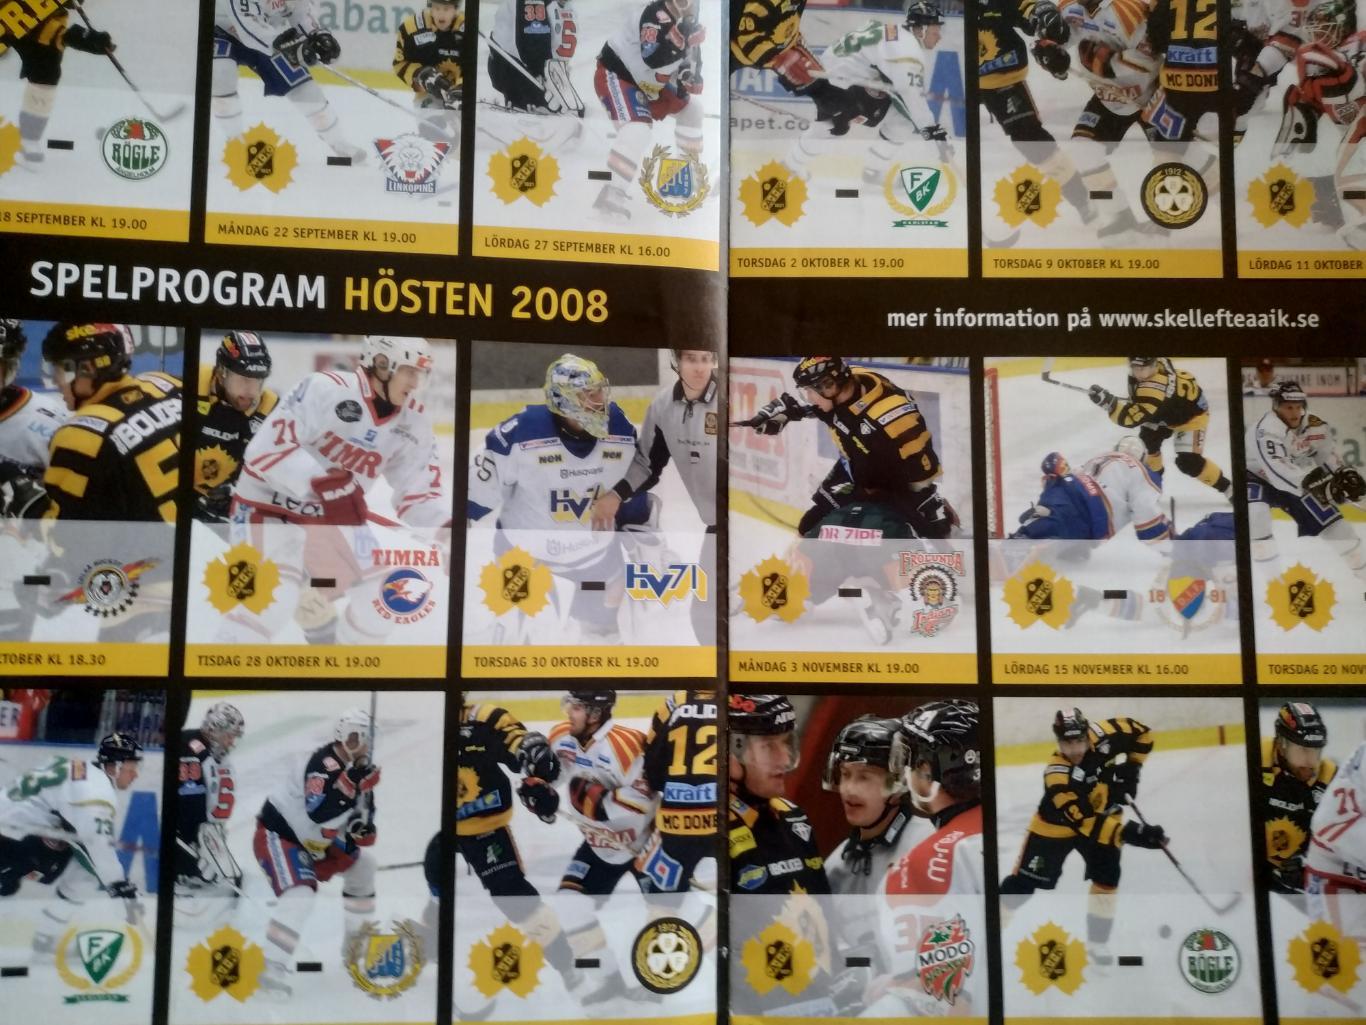 ХОККЕЙ ПРОГРАММА МАТЧА НХЛ NHL 2008-09 SKELLEFTEA PROGRAM STADIUM SWEDISH 1